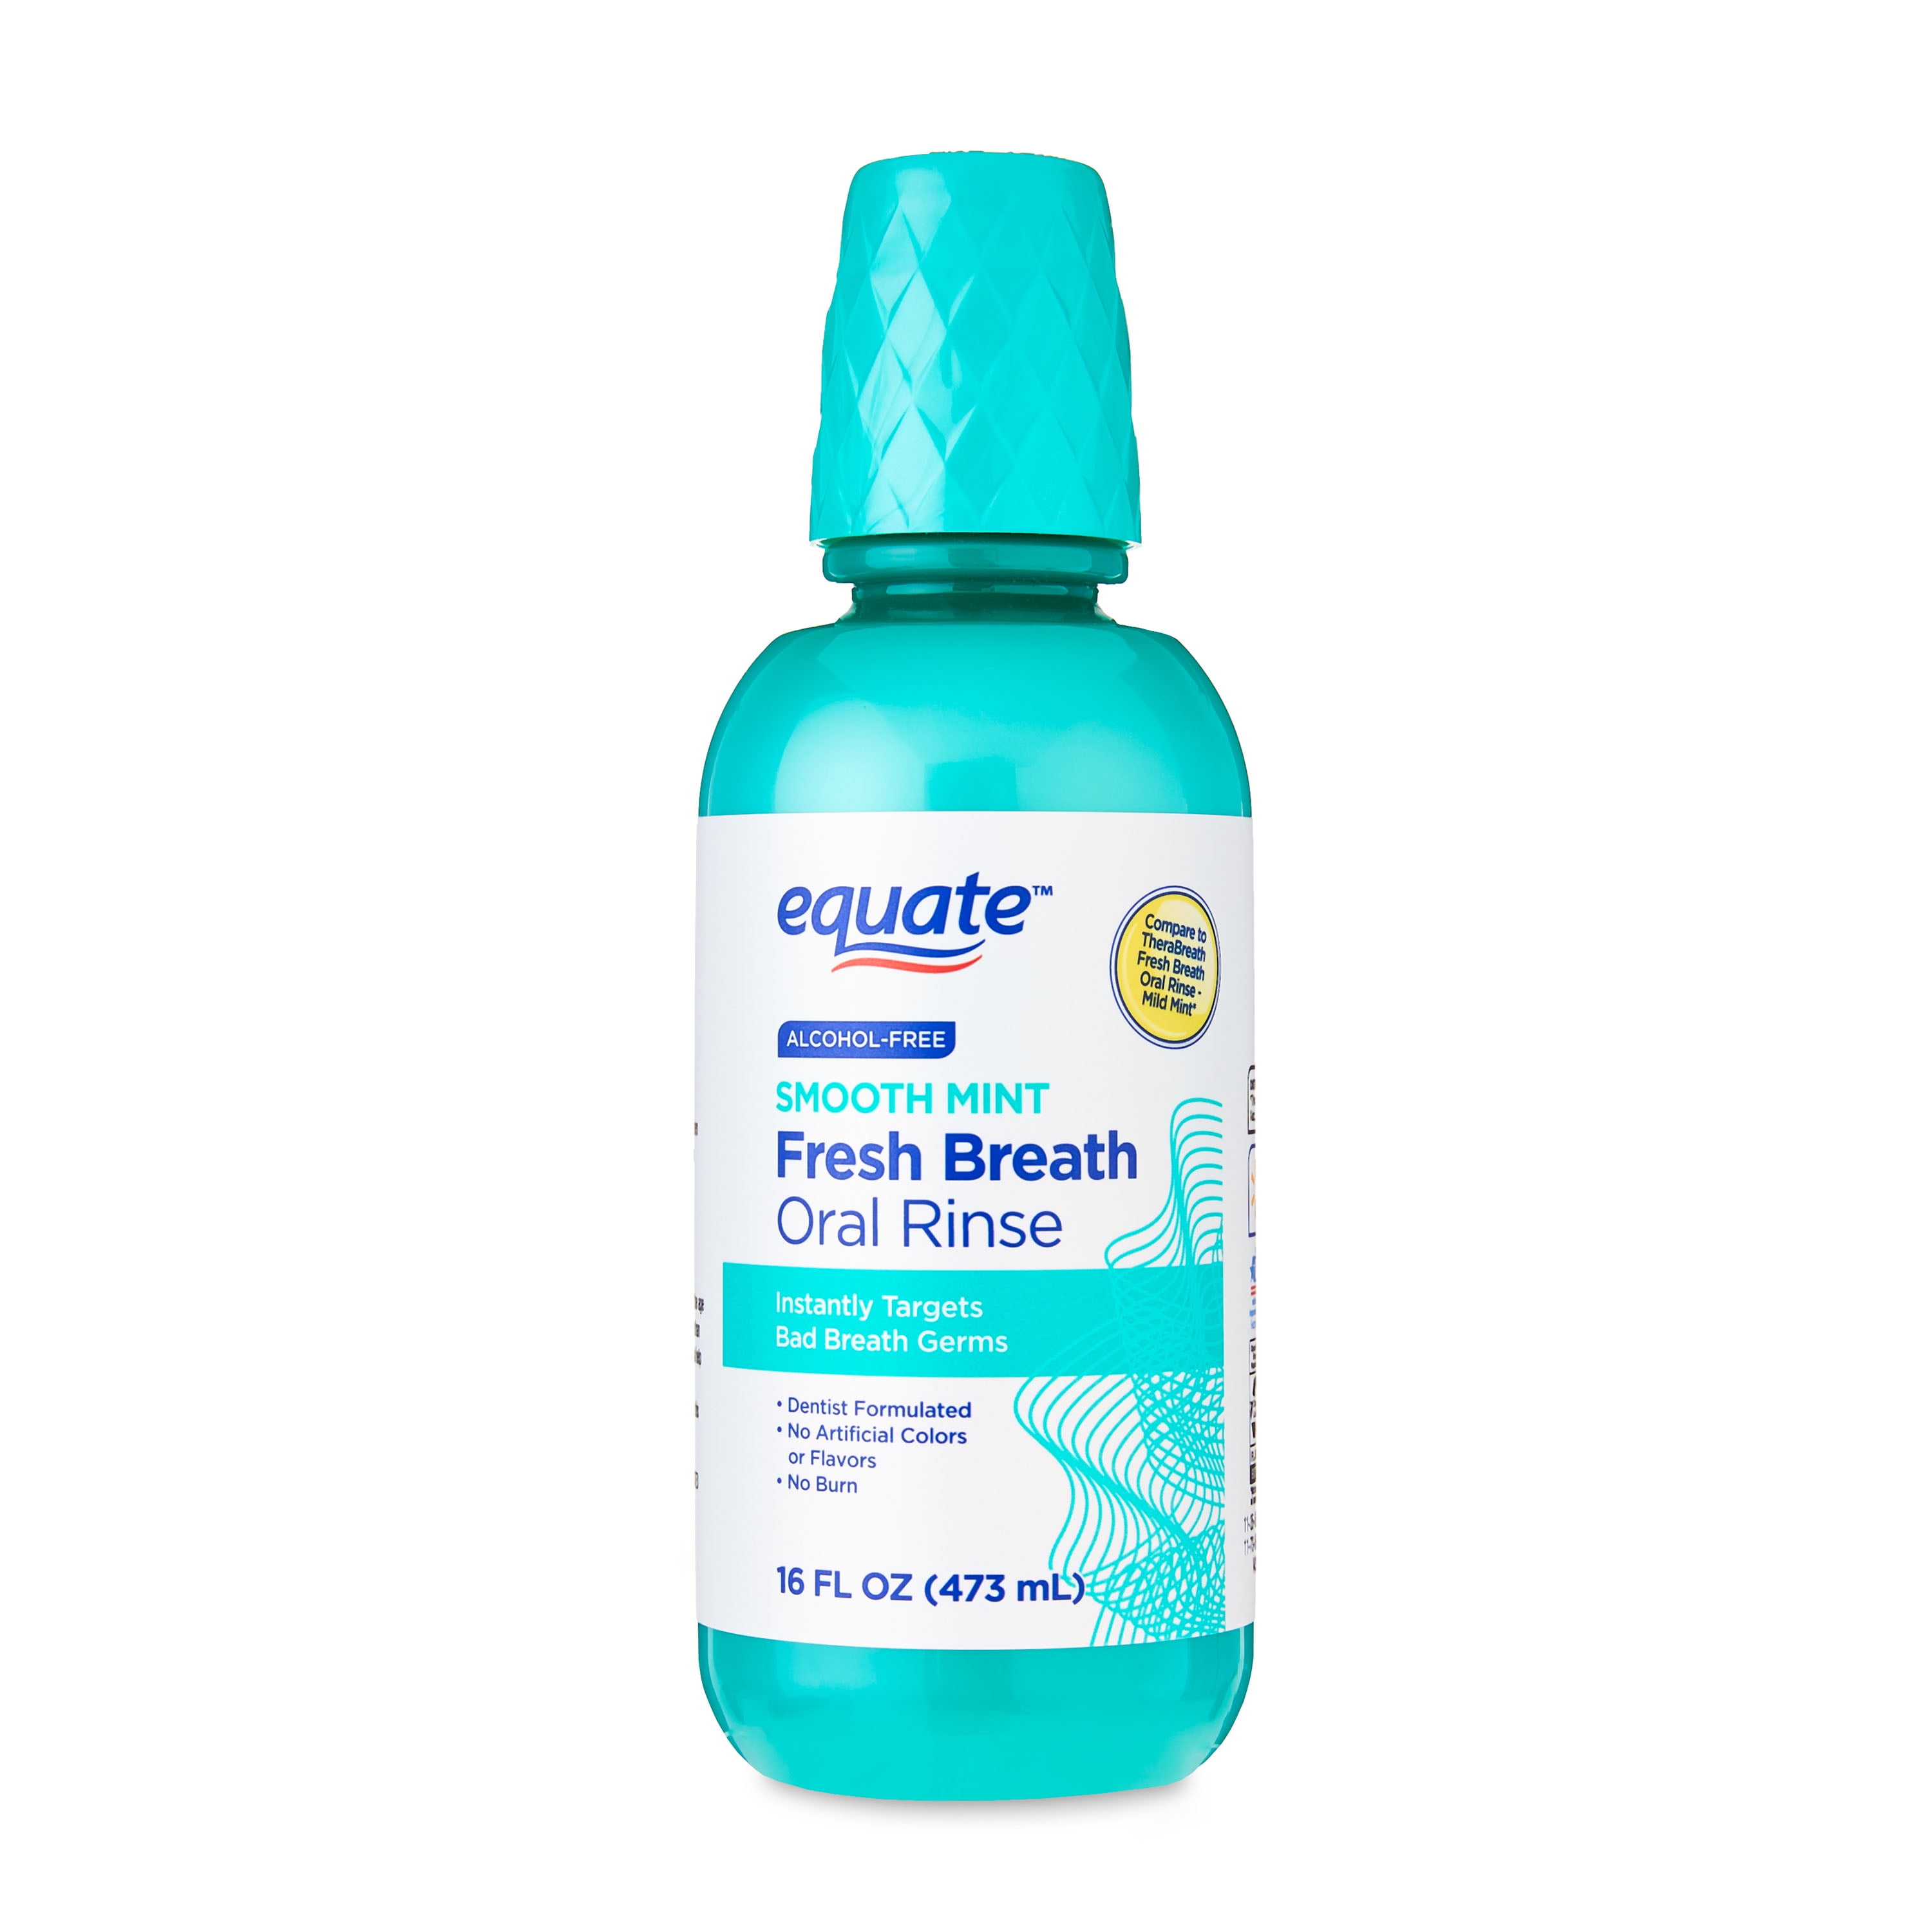 Equate Fresh Breath Oral Rinse Alcohol Free Mouthwash Smooth Mint Flavor - 16 fl oz